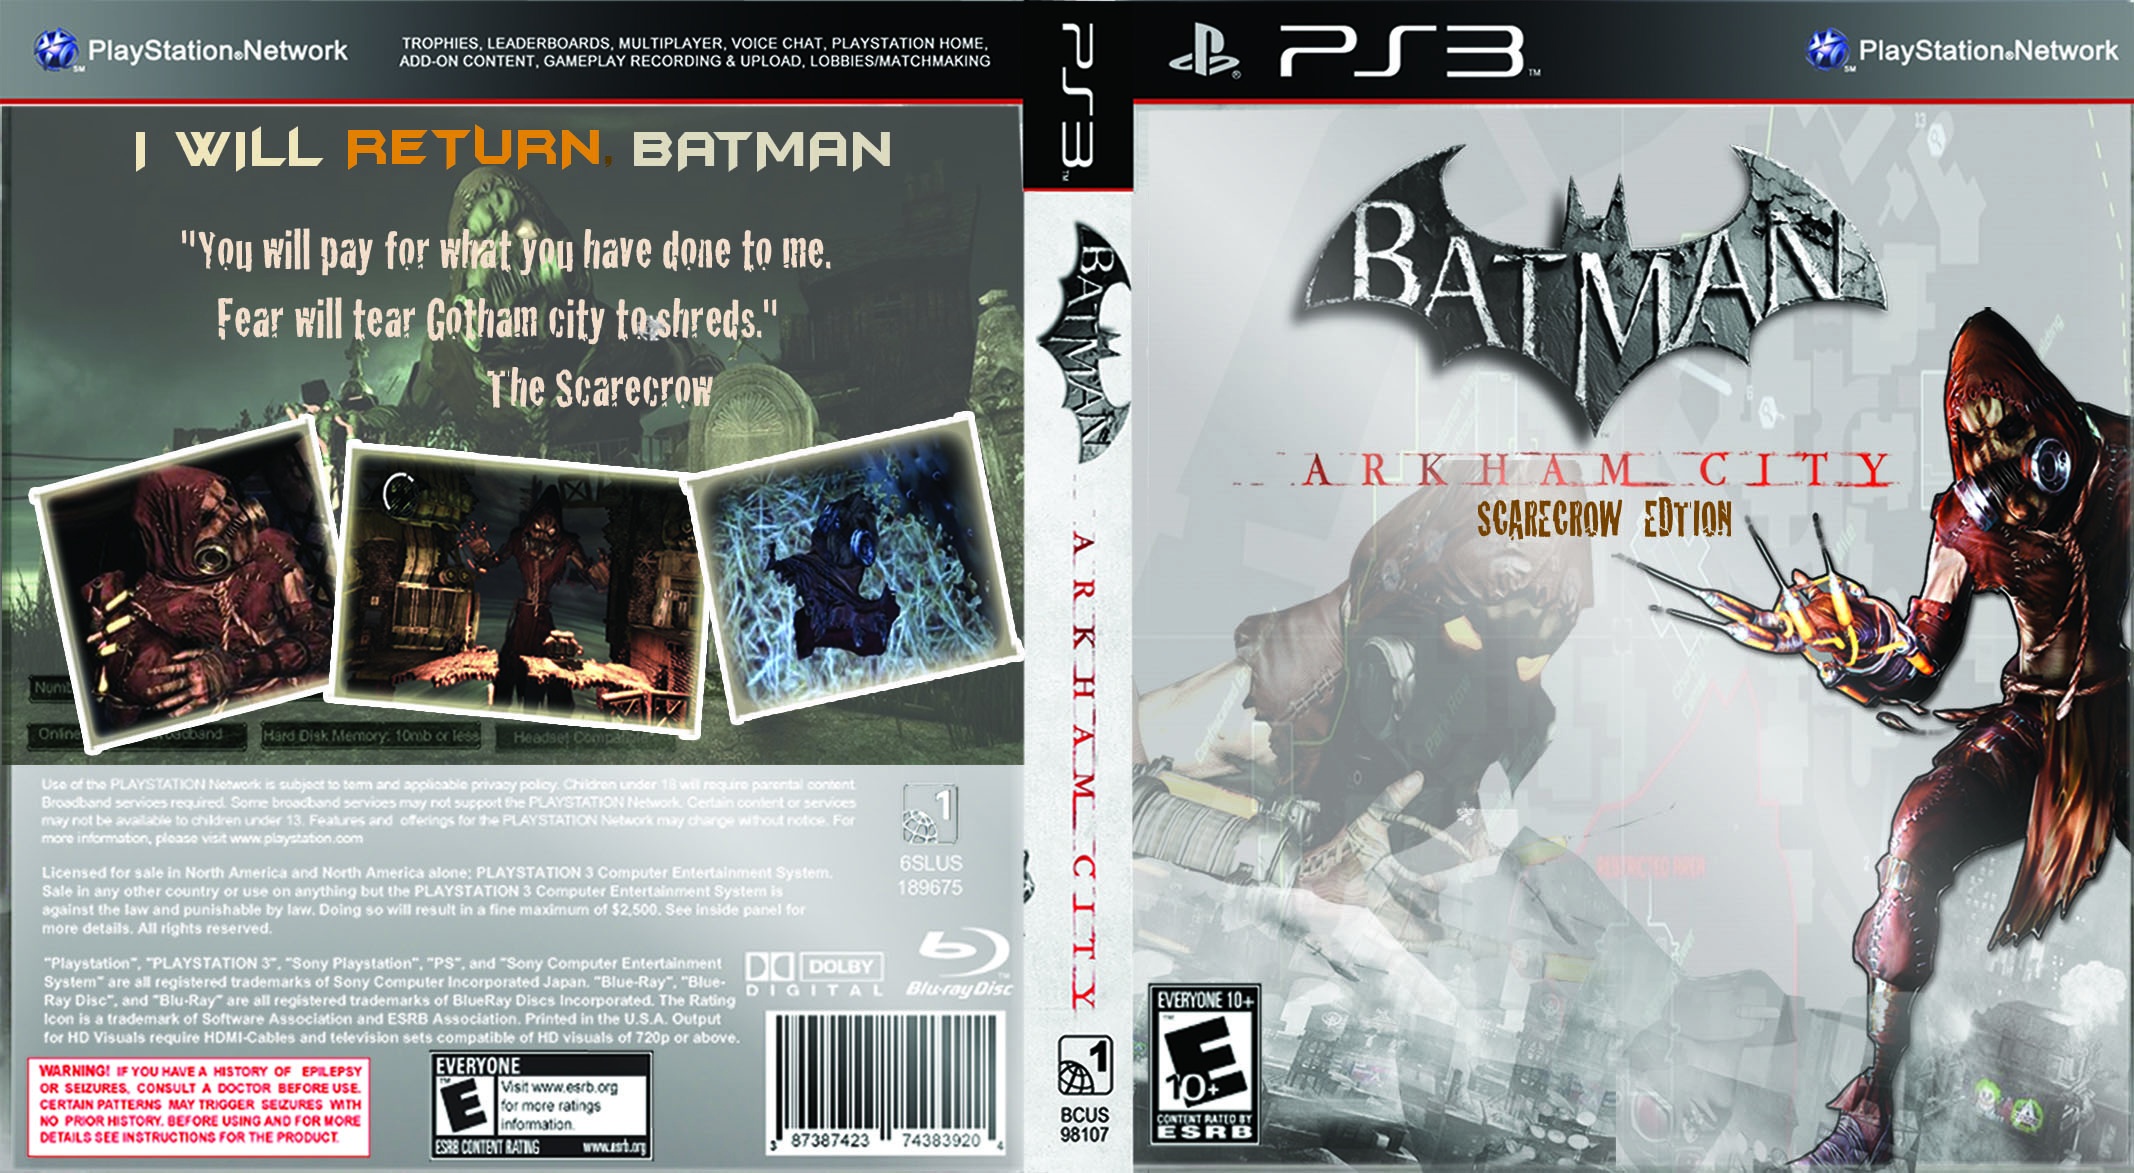 Batman Arkham City Scarecrow Edition PlayStation 3 Box Art Cover by hugobij